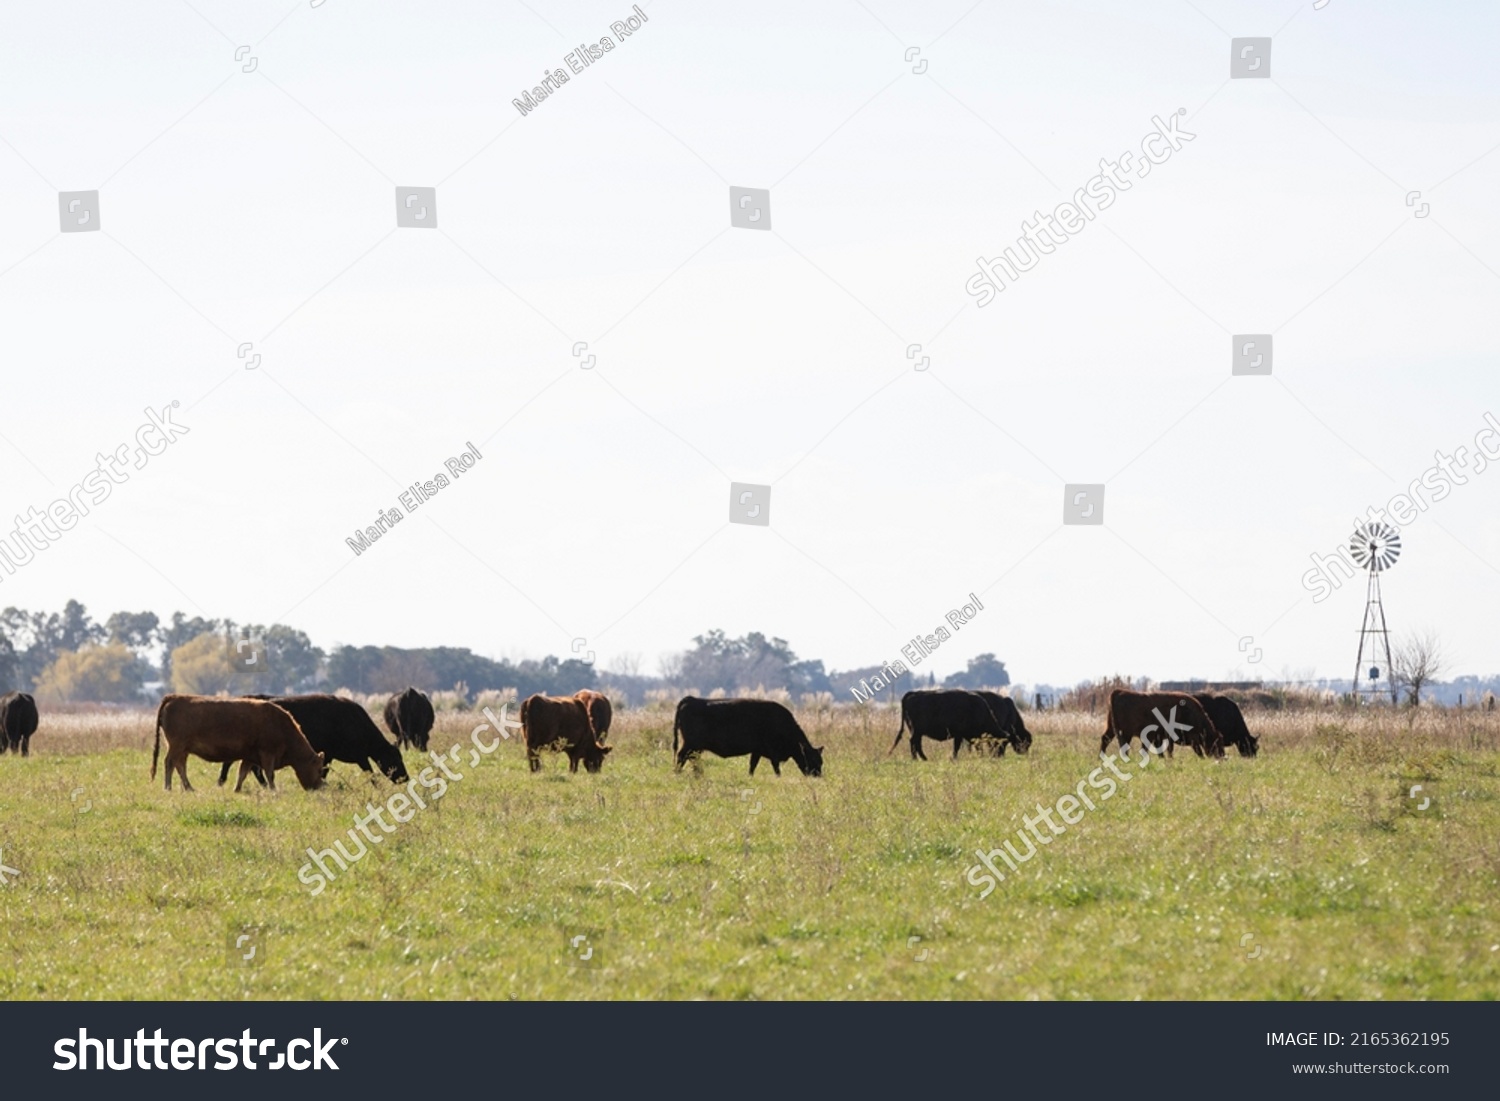 portrait of angus cattle in field in winter days #2165362195